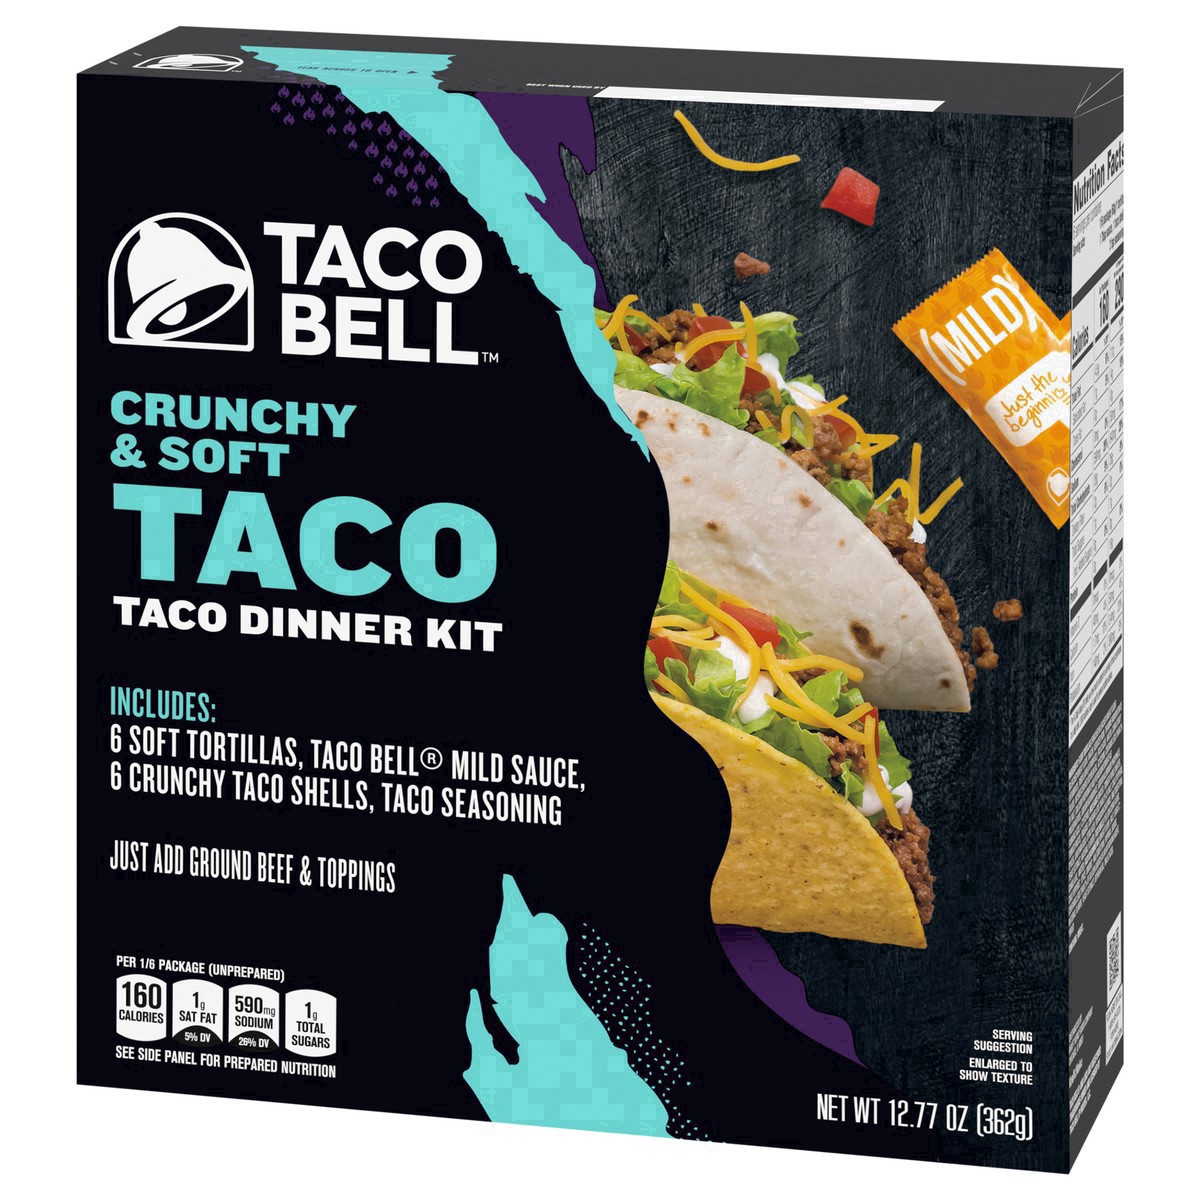 slide 18 of 101, Taco Bell Crunchy & Soft Taco Cravings Kit with 6 Soft Tortillas, 6 Crunchy Taco Shells, Taco Bell Mild Sauce & Seasoning, 12.77 oz Box, 1 ct